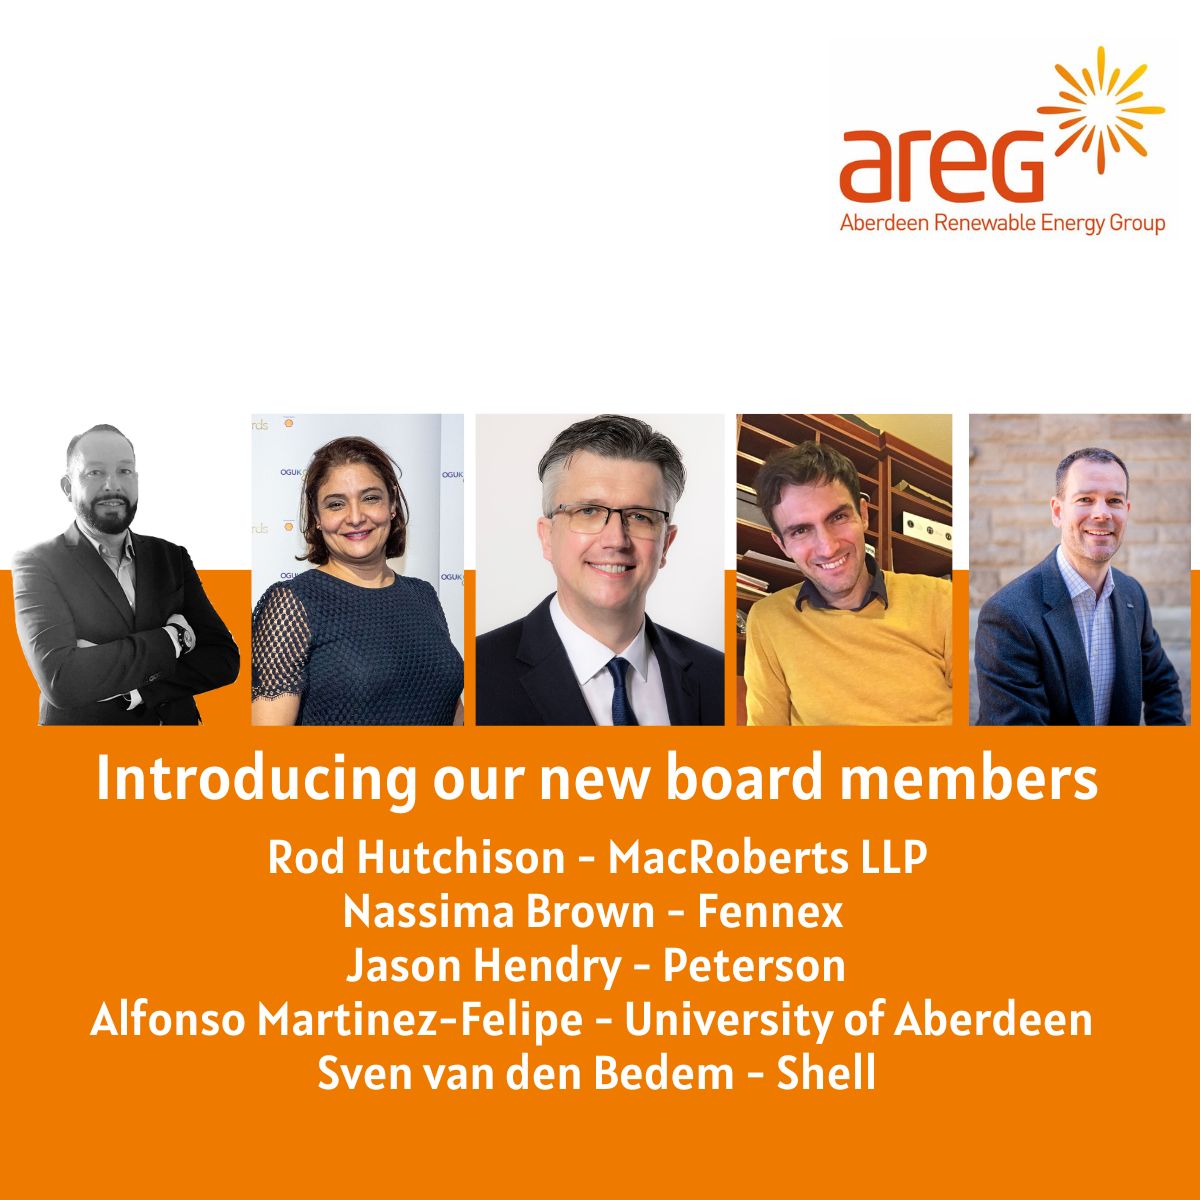 AREG NEWS: New directors join AREG board